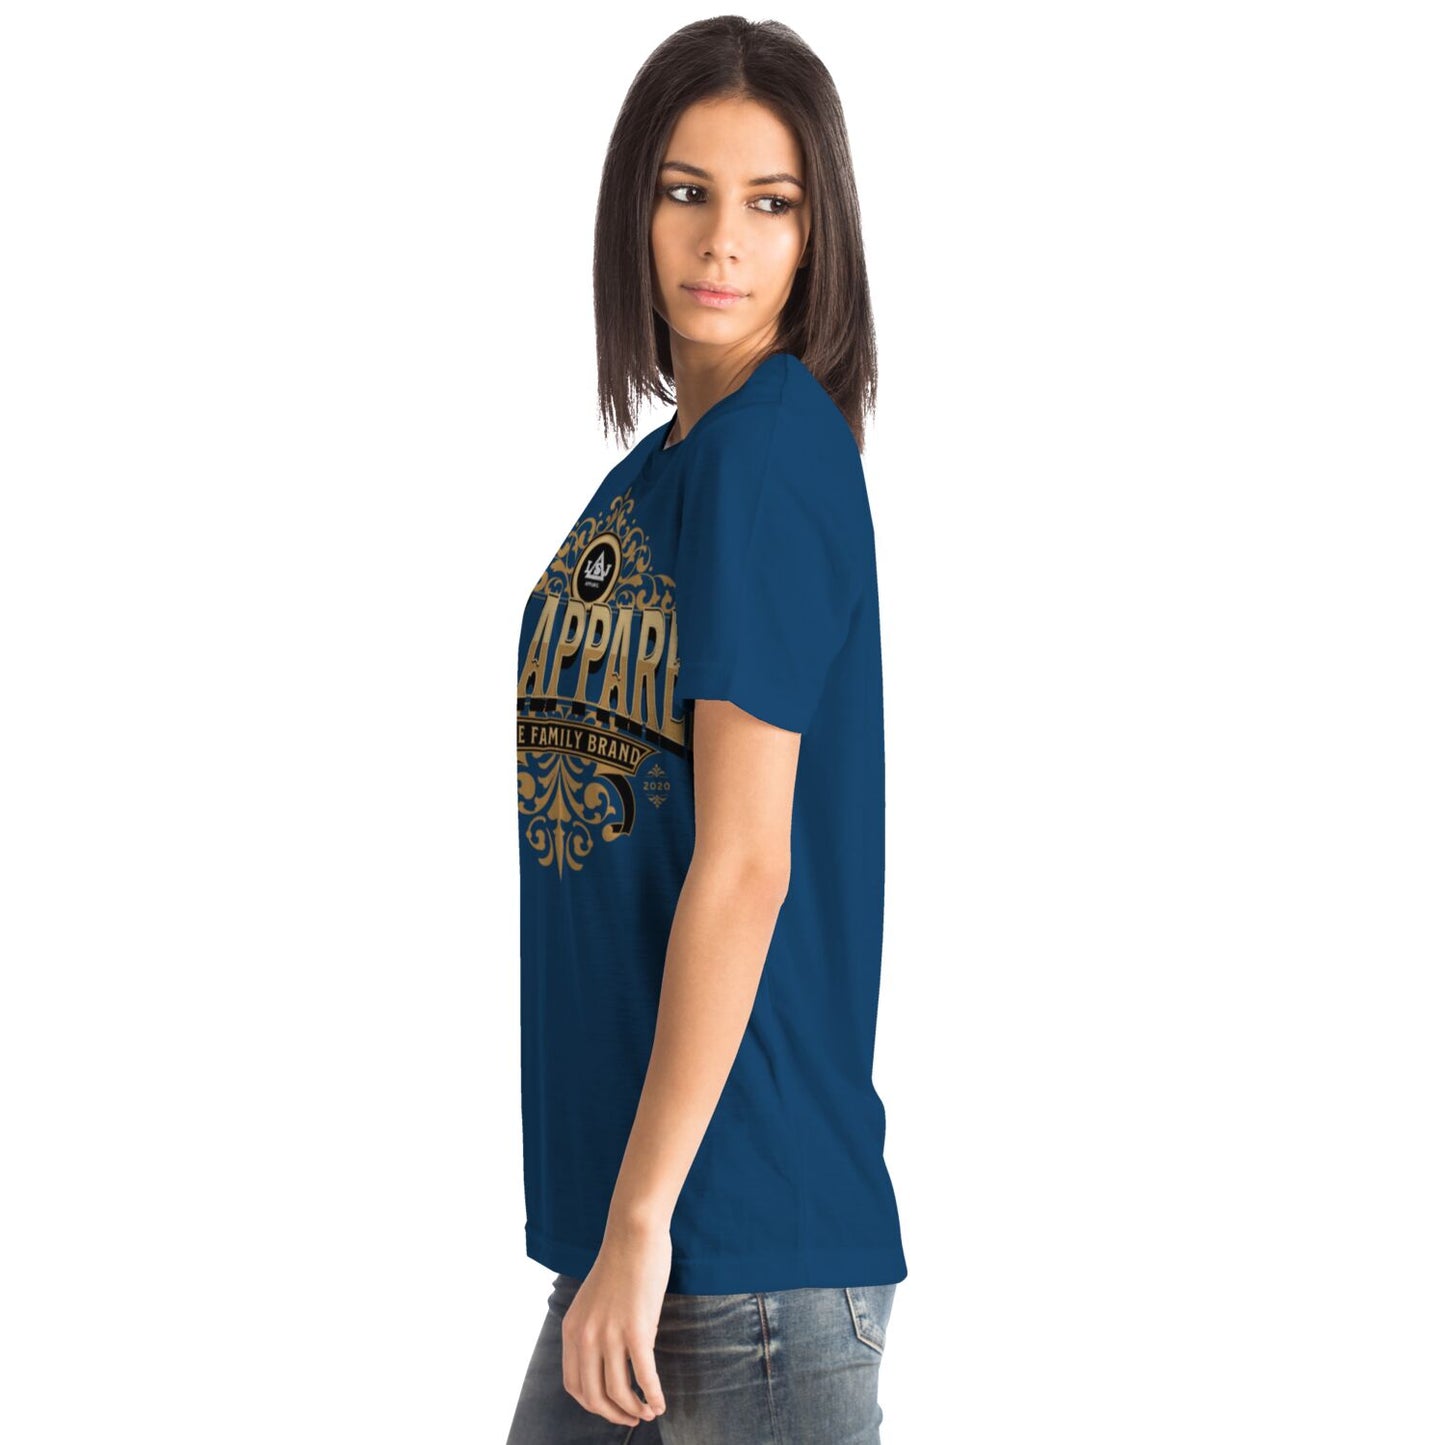 LSJ Retro Family Brand Blue All Over Print T-Shirt